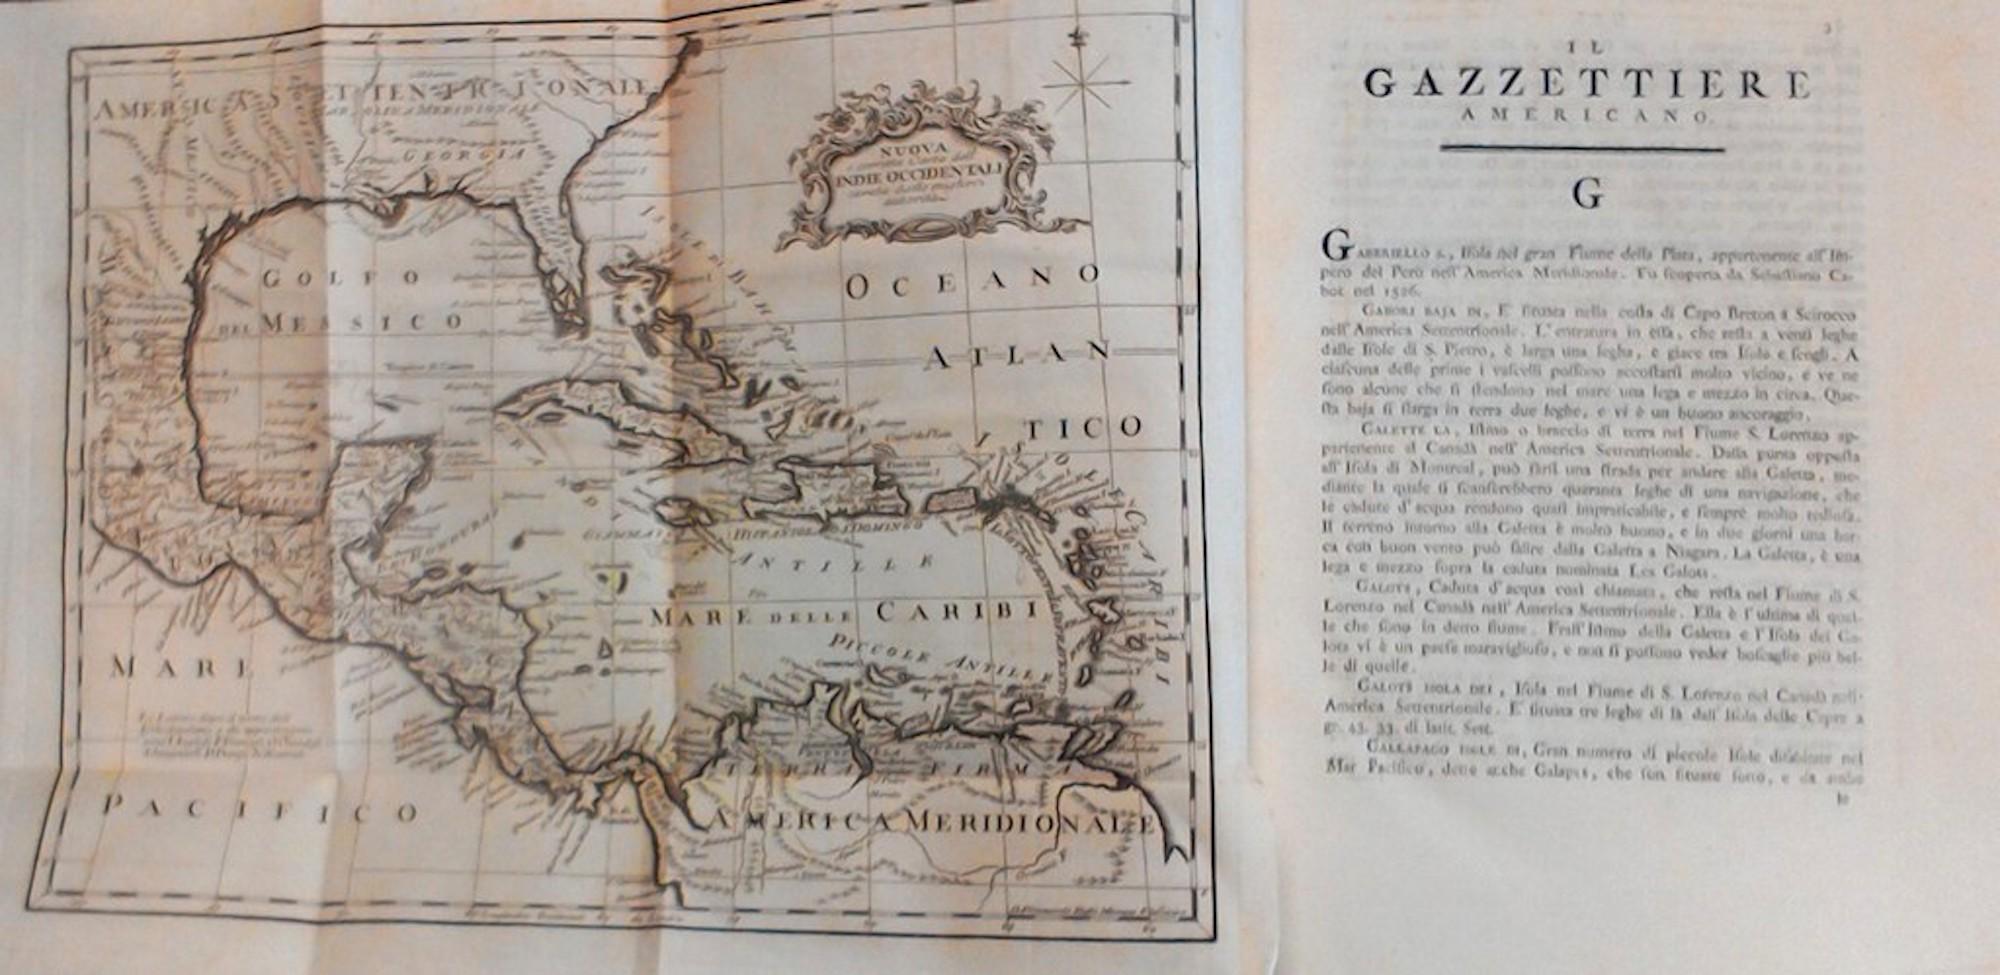 Il Gazzettiere Americano - Ancient Illustrated Book on the Americas - 1763 For Sale 12